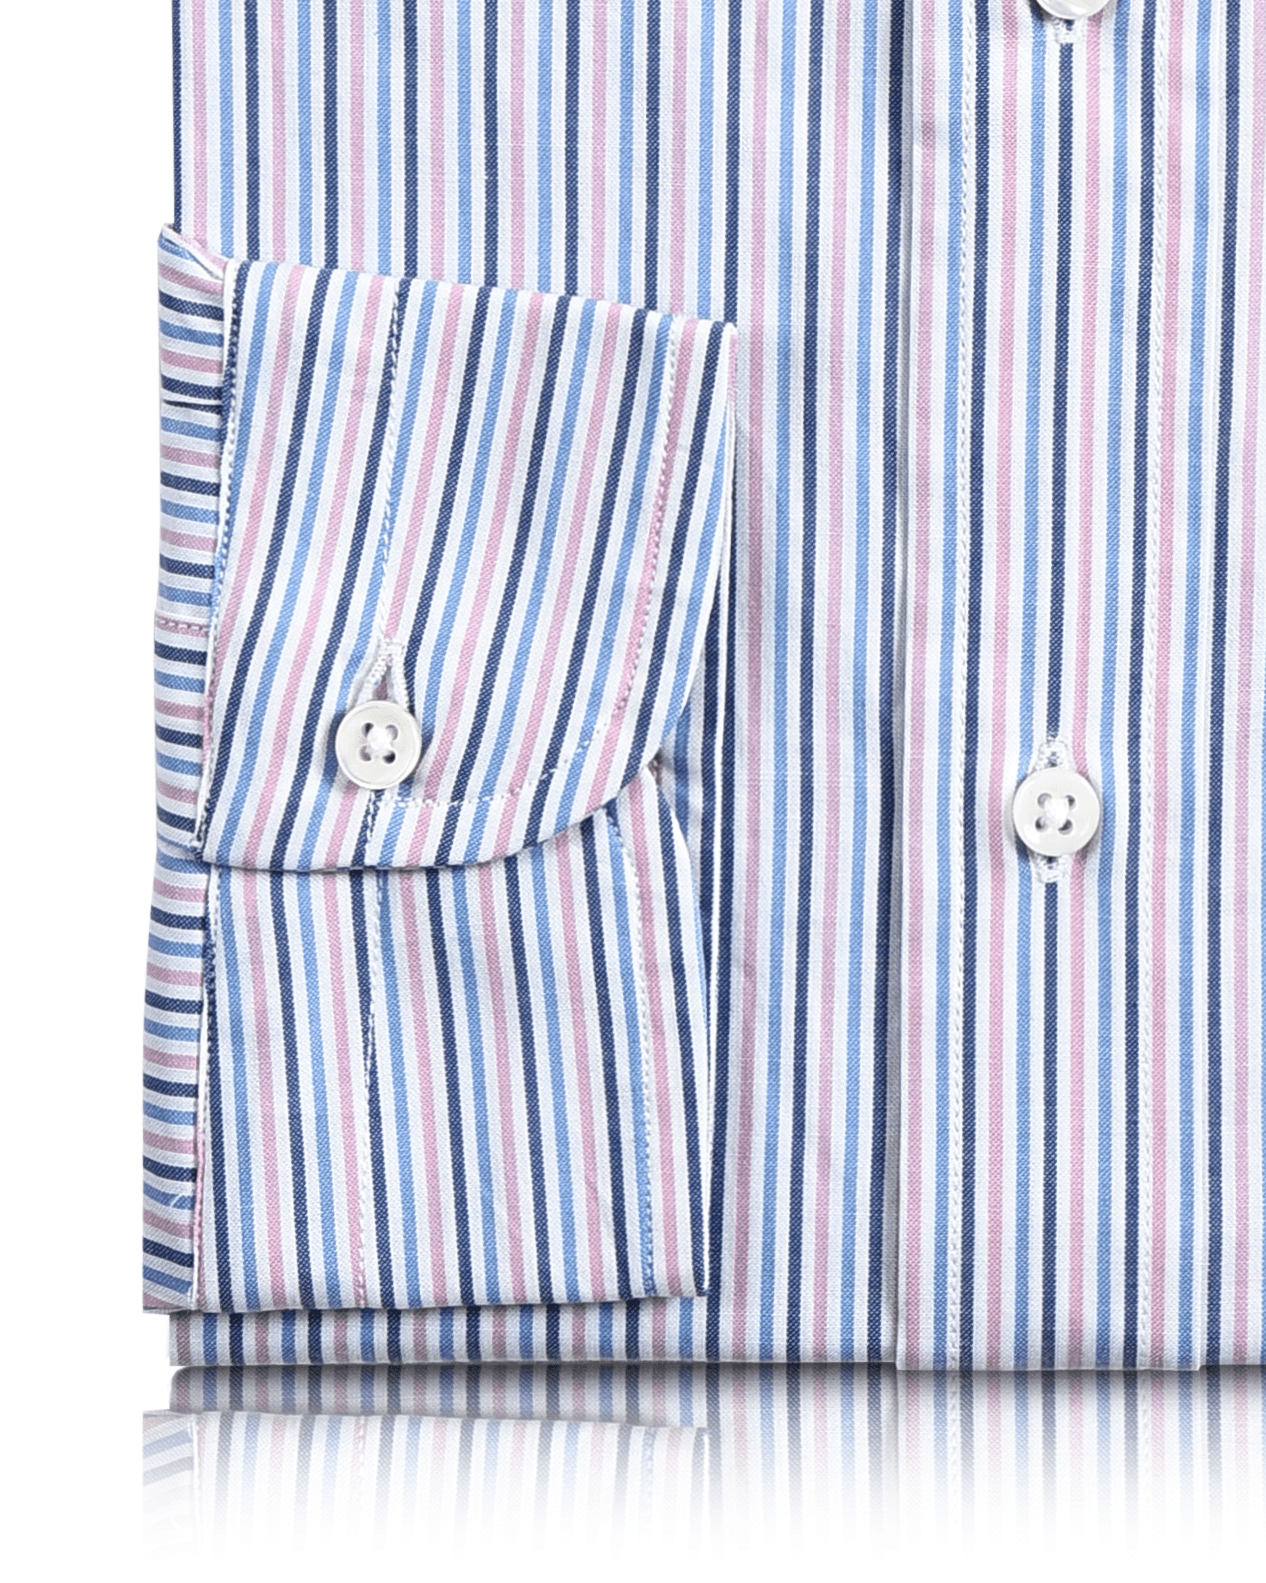 Pink White Blue Alternate Stripes Shirt